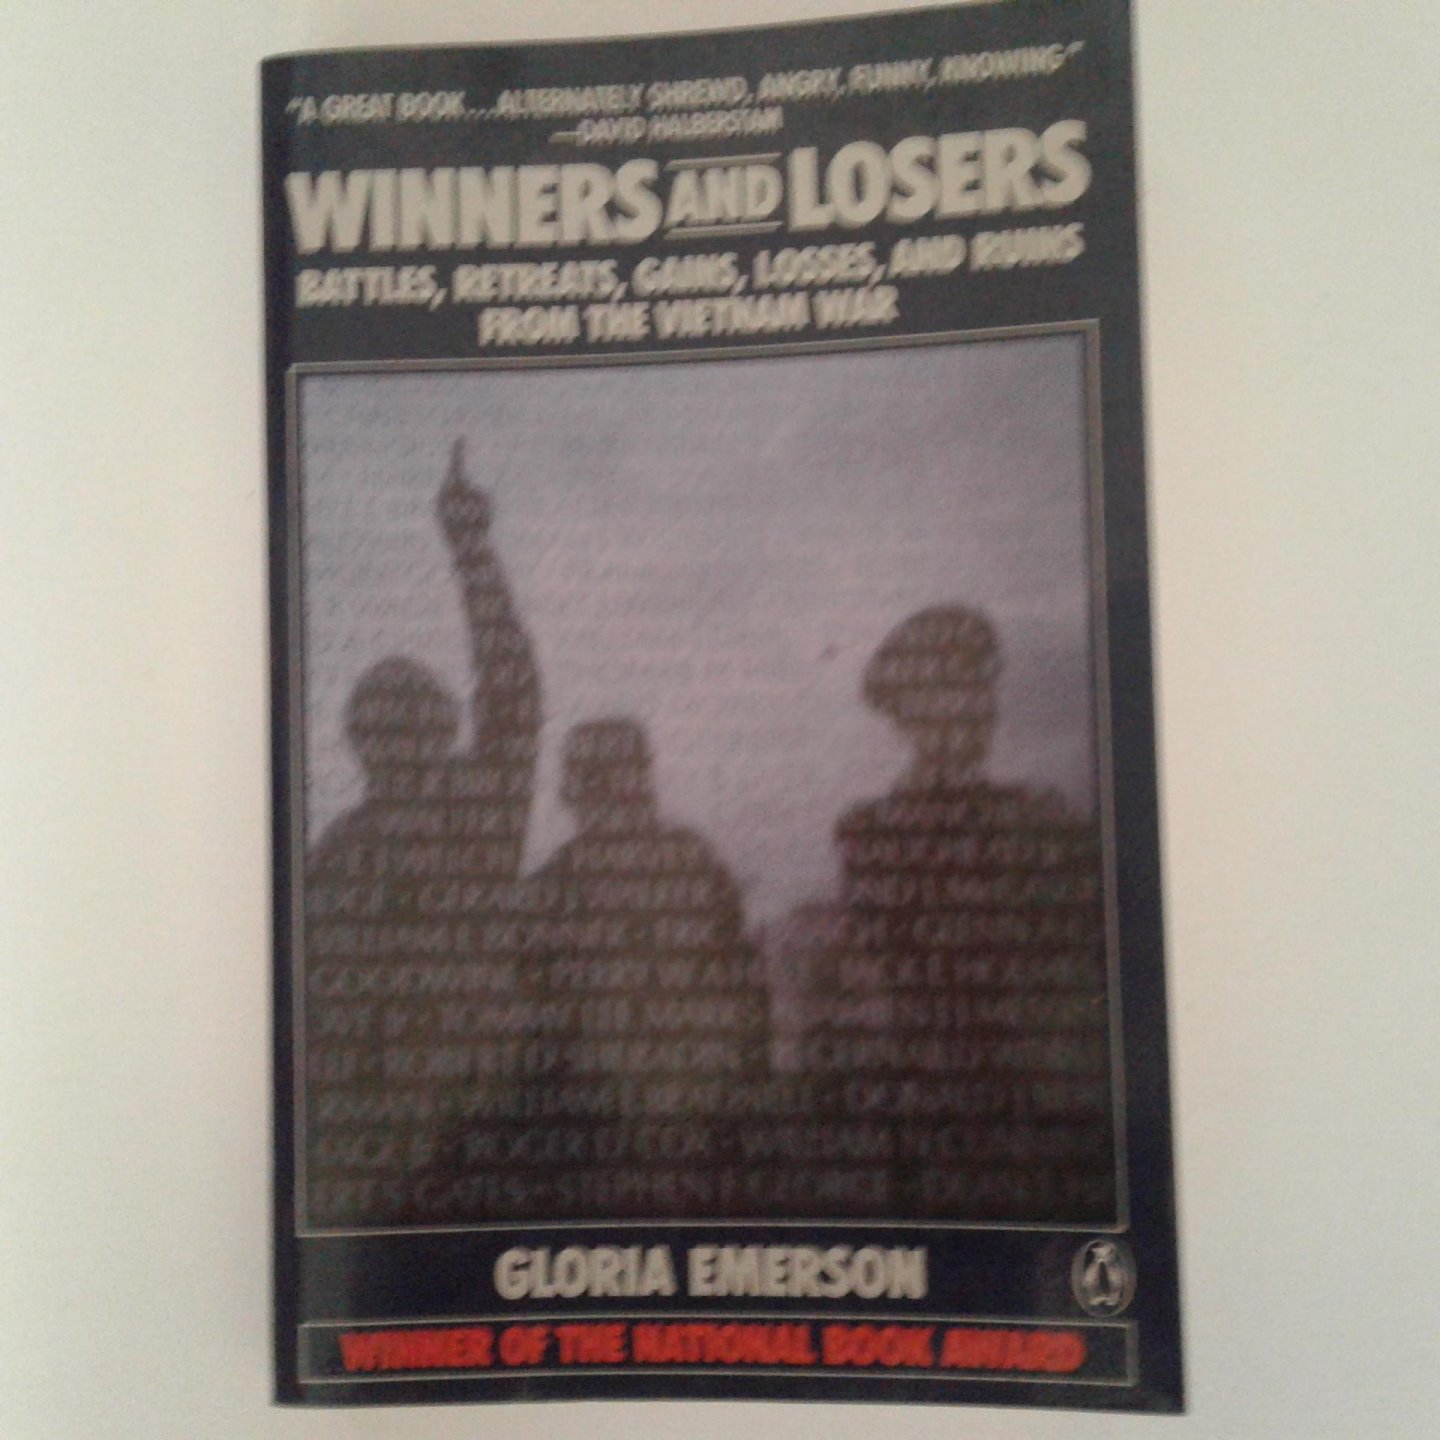 Emerson, Gloria - Winners & Losers - Battles, Retreats, Gains, Losses, and Ruins from the Vietnam War - Battles, Retreats, Gains, Losses, and Ruins from the Vietnam War